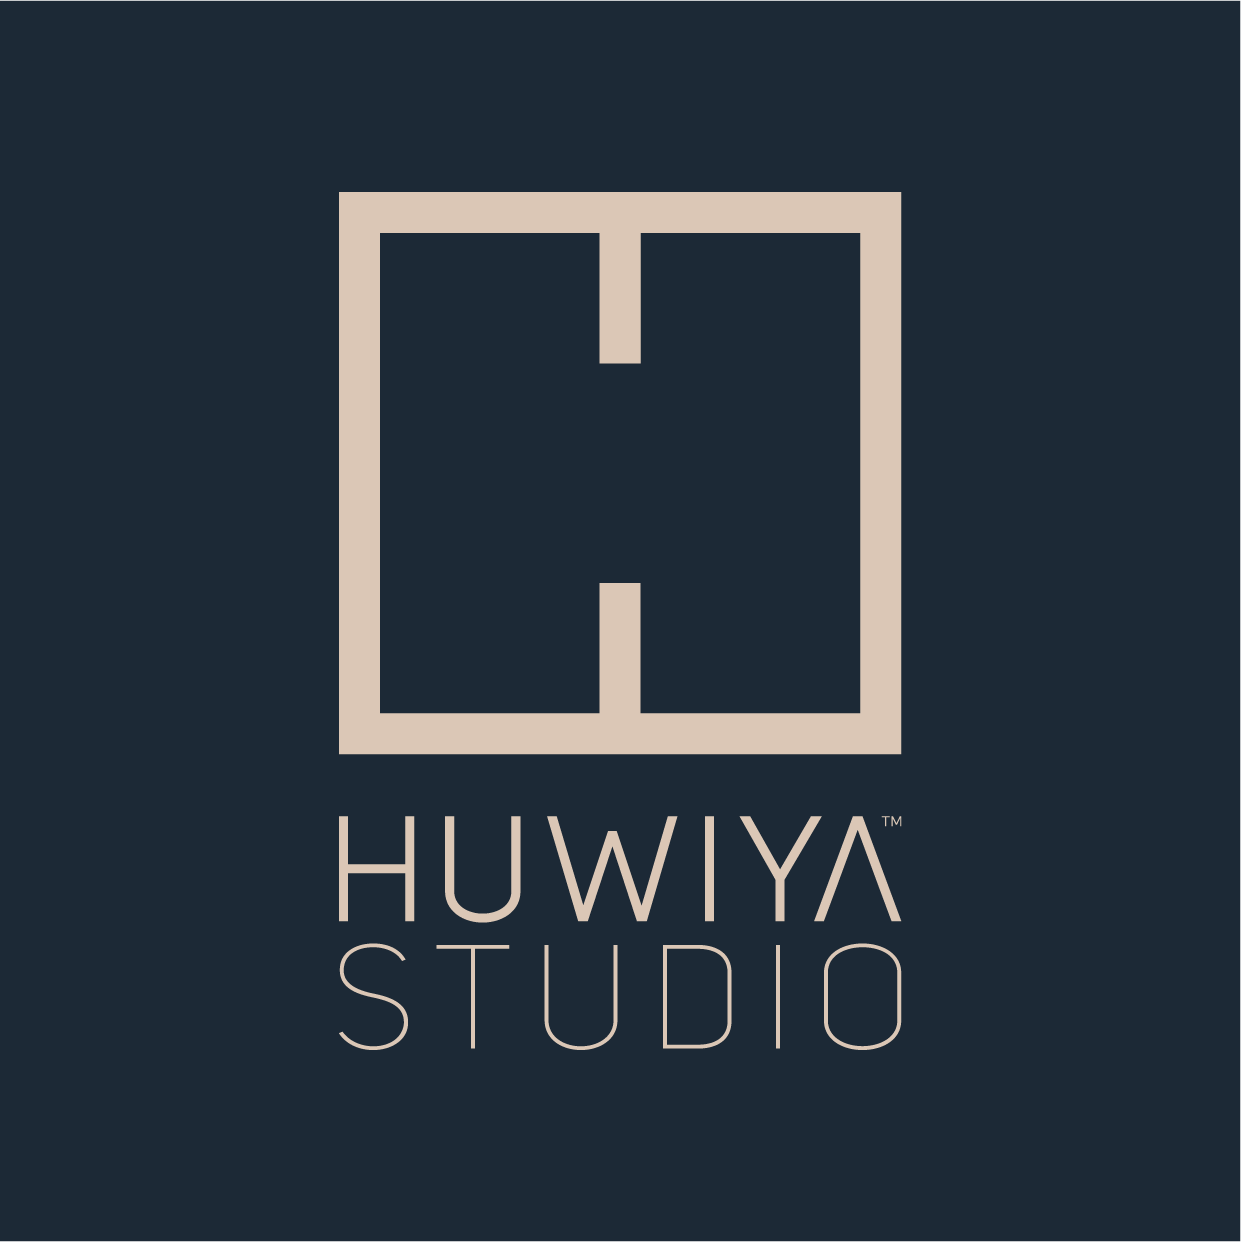 Huwiya Studio